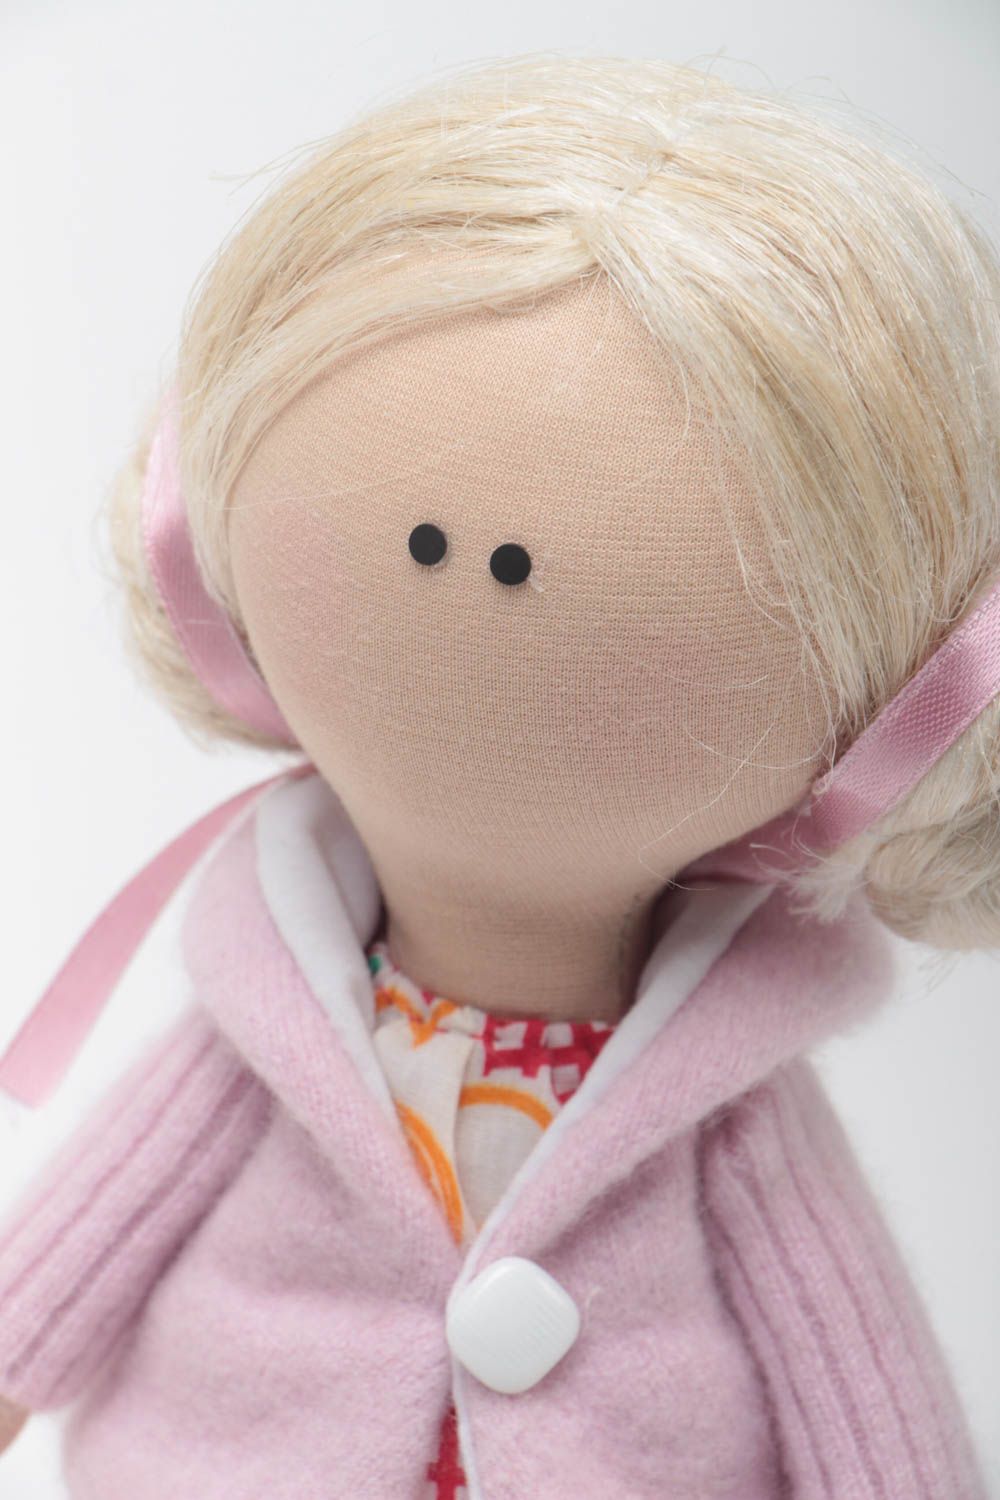 Handmade doll decorative doll nursery decor ideas unusual gift for children photo 3